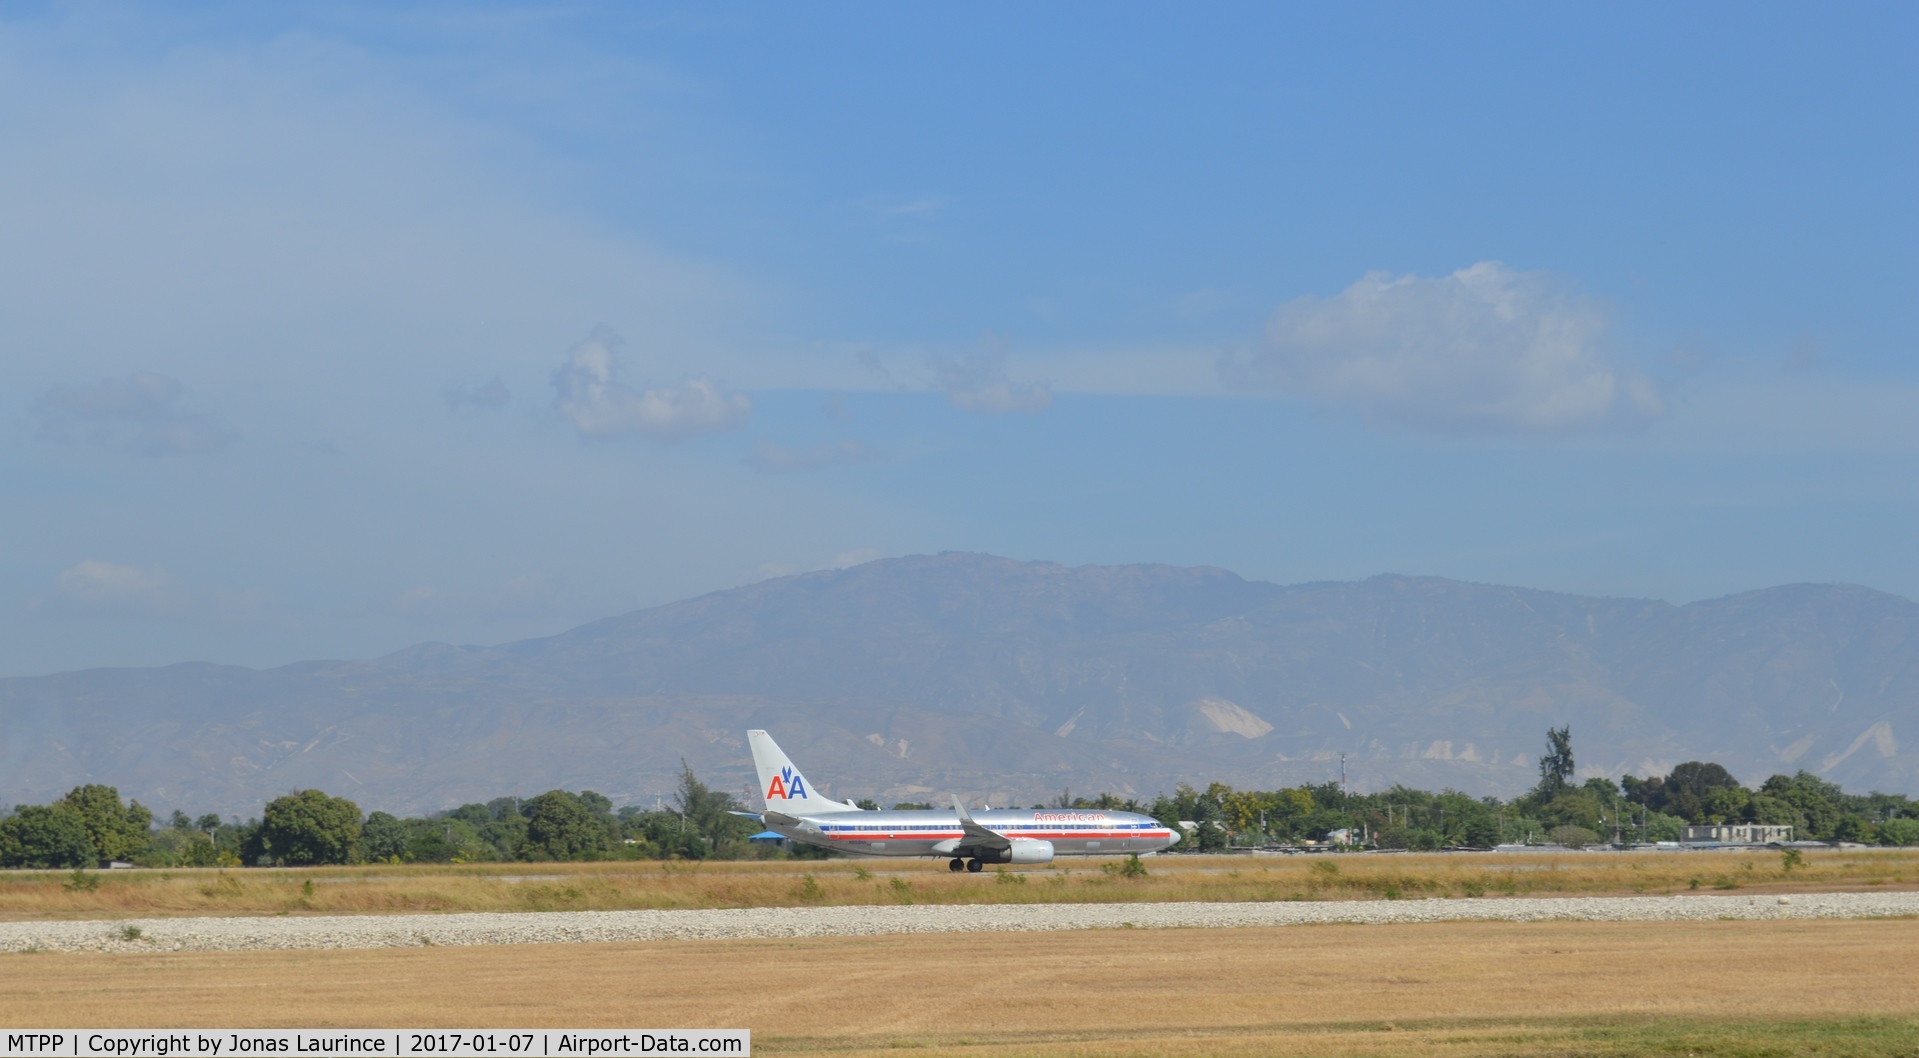 Port-au-Prince International Airport (Toussaint Louverture Int'l), Port-au-Prince Haiti (MTPP) - American Airlines Aircraft take off